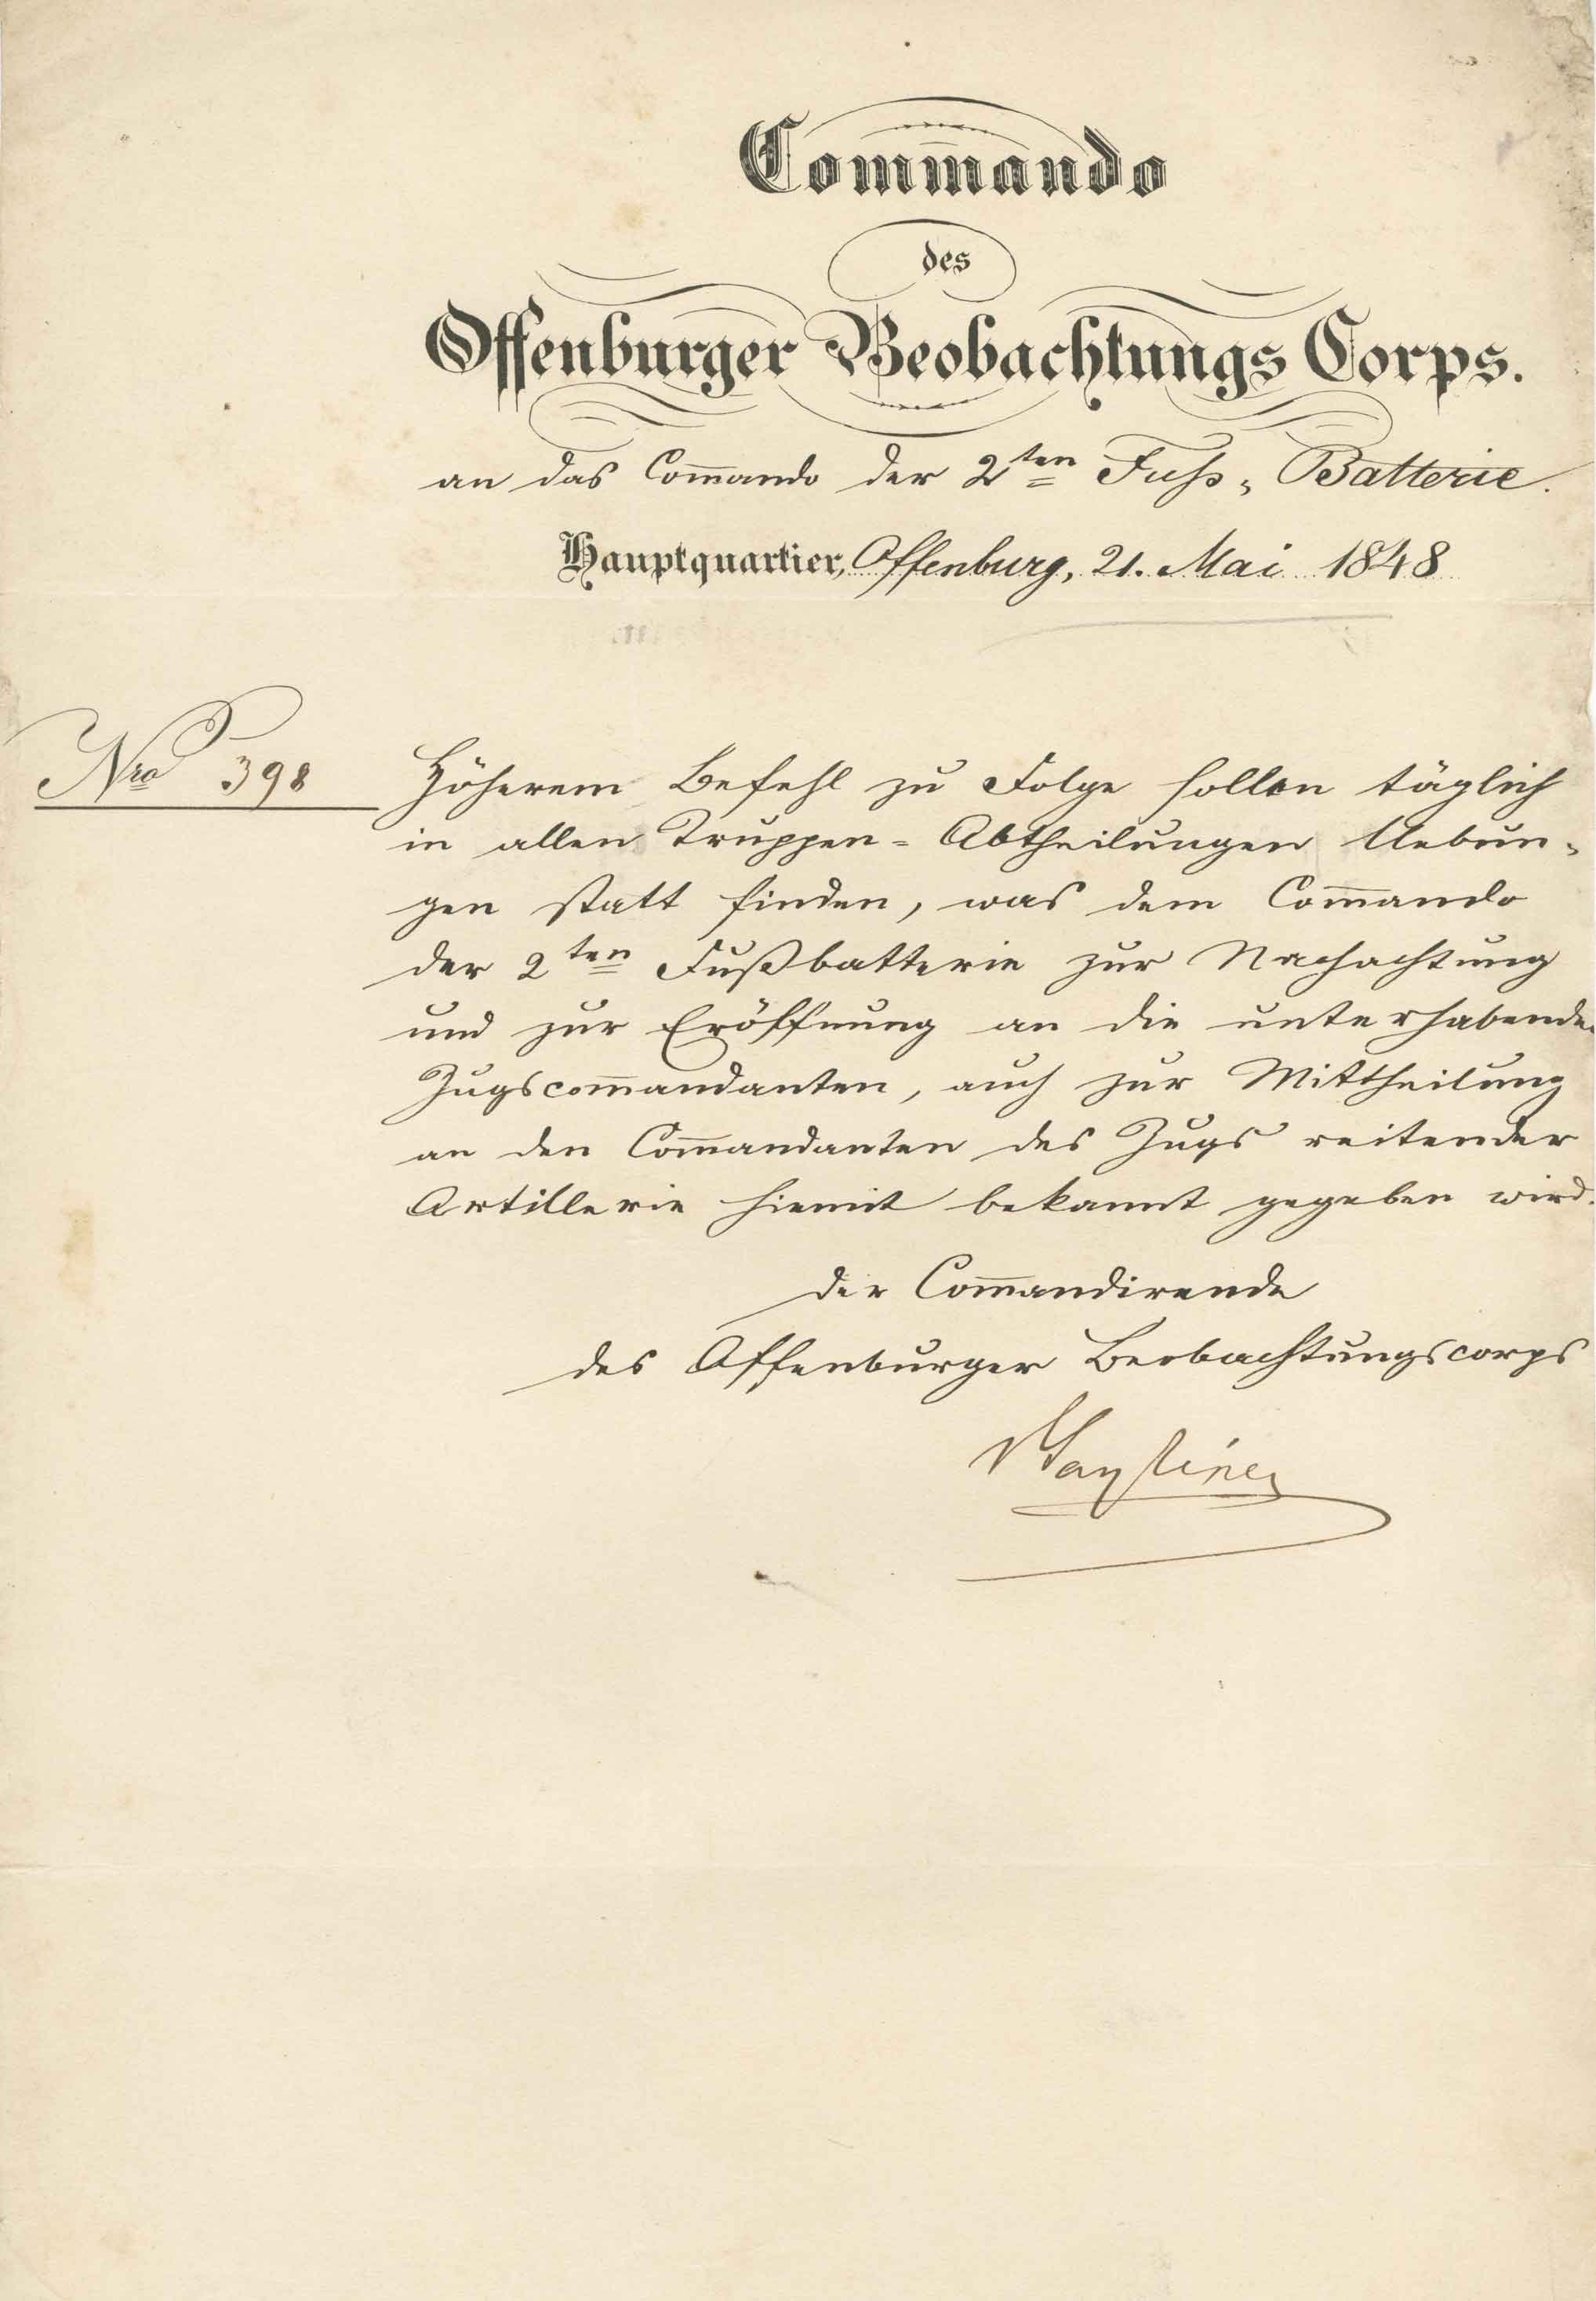 Befehl "Commando des Offenburger Beobachtungs Corps" (21.05.1848) (Wehrgeschichtliches Museum Rastatt CC BY-NC-SA)